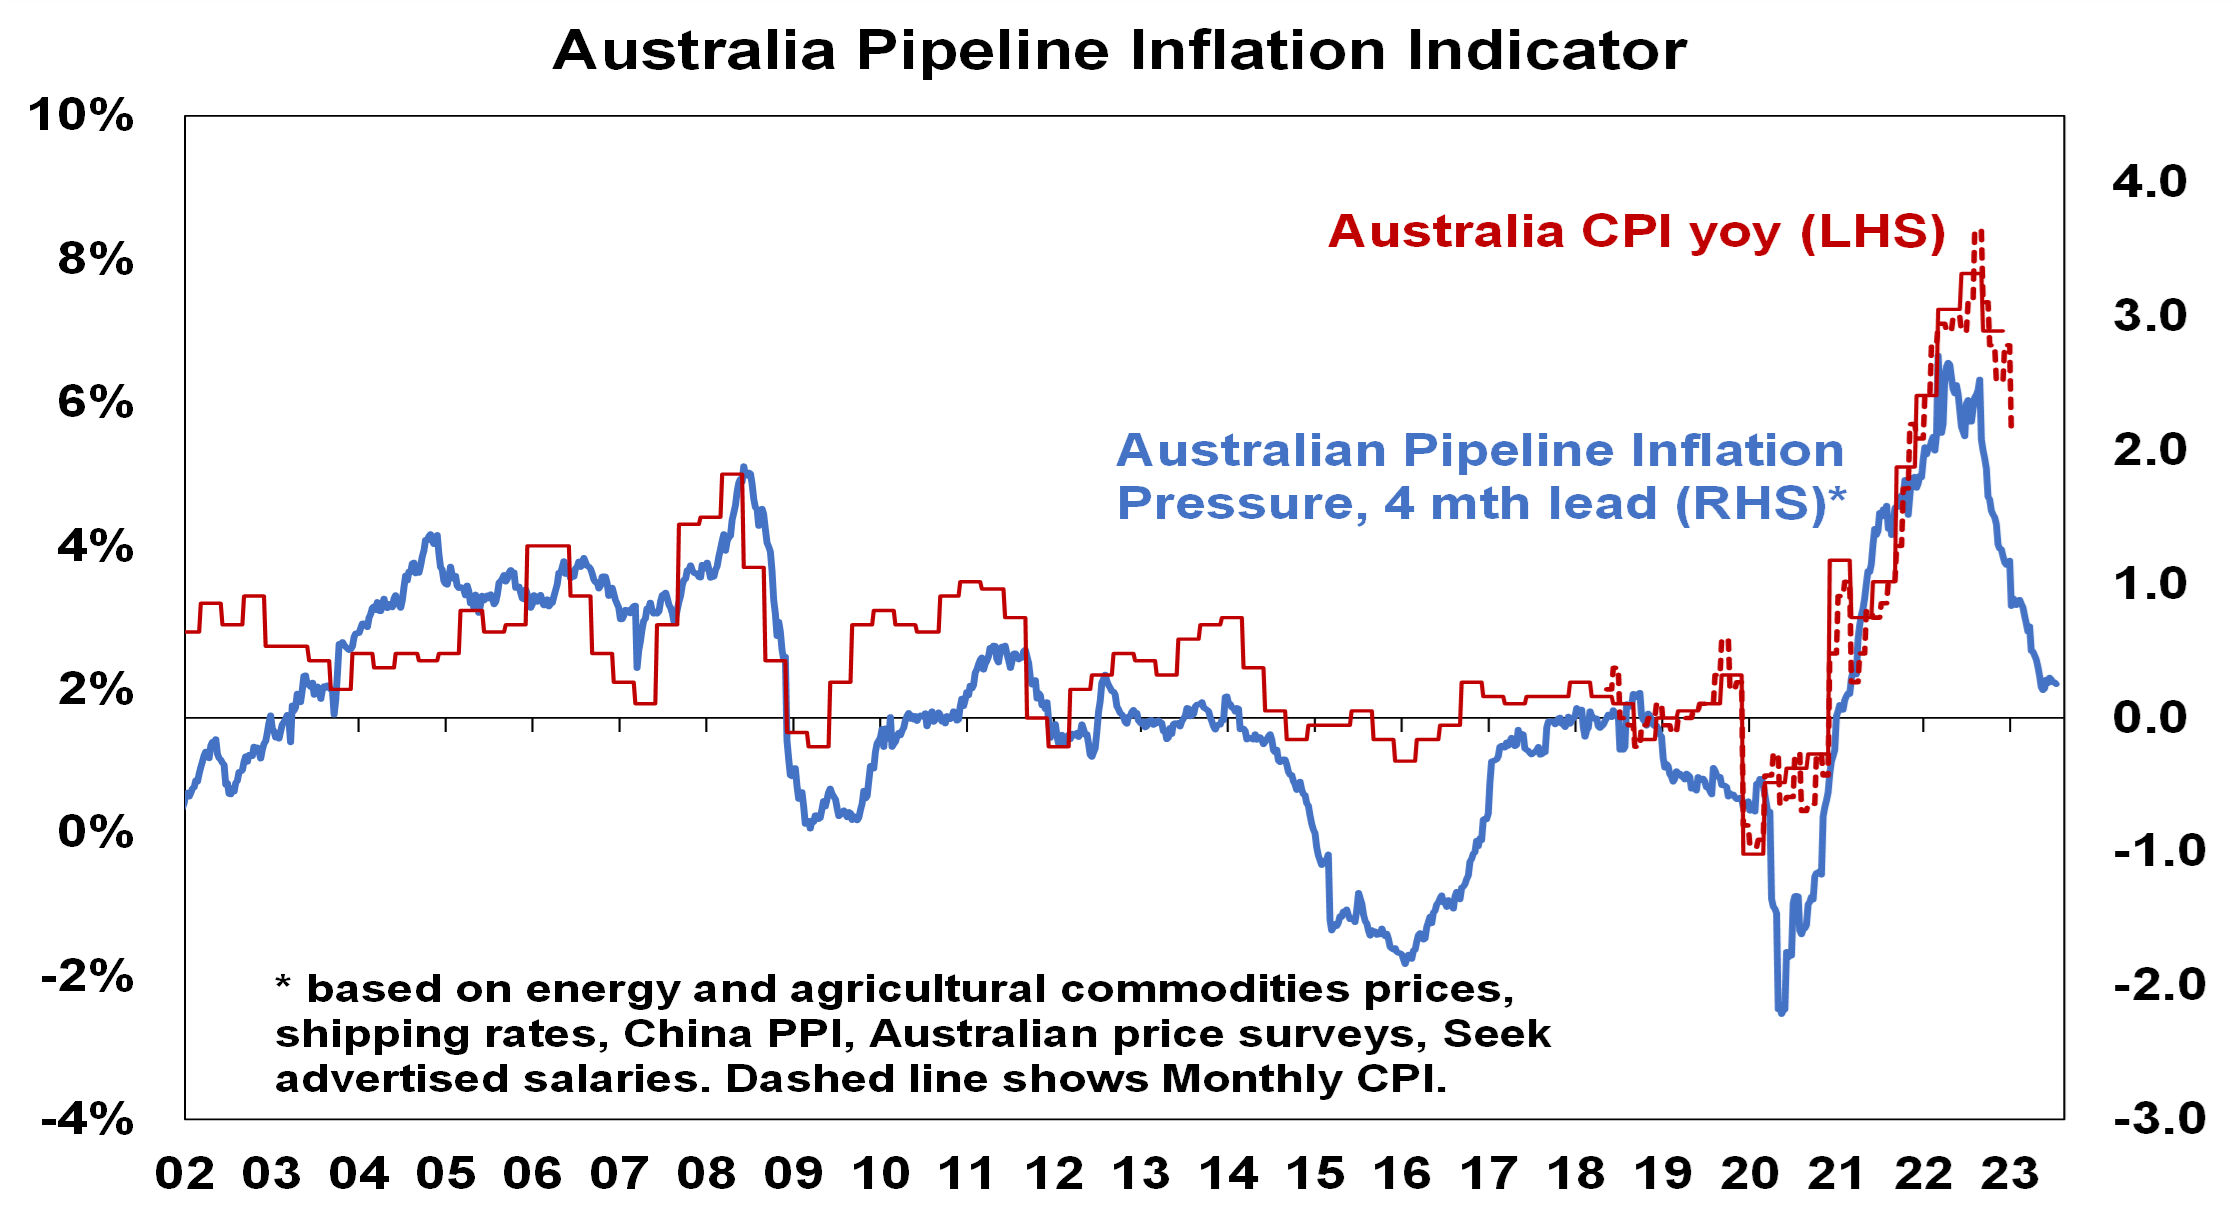 Australia Pipeline Inflation Indicator